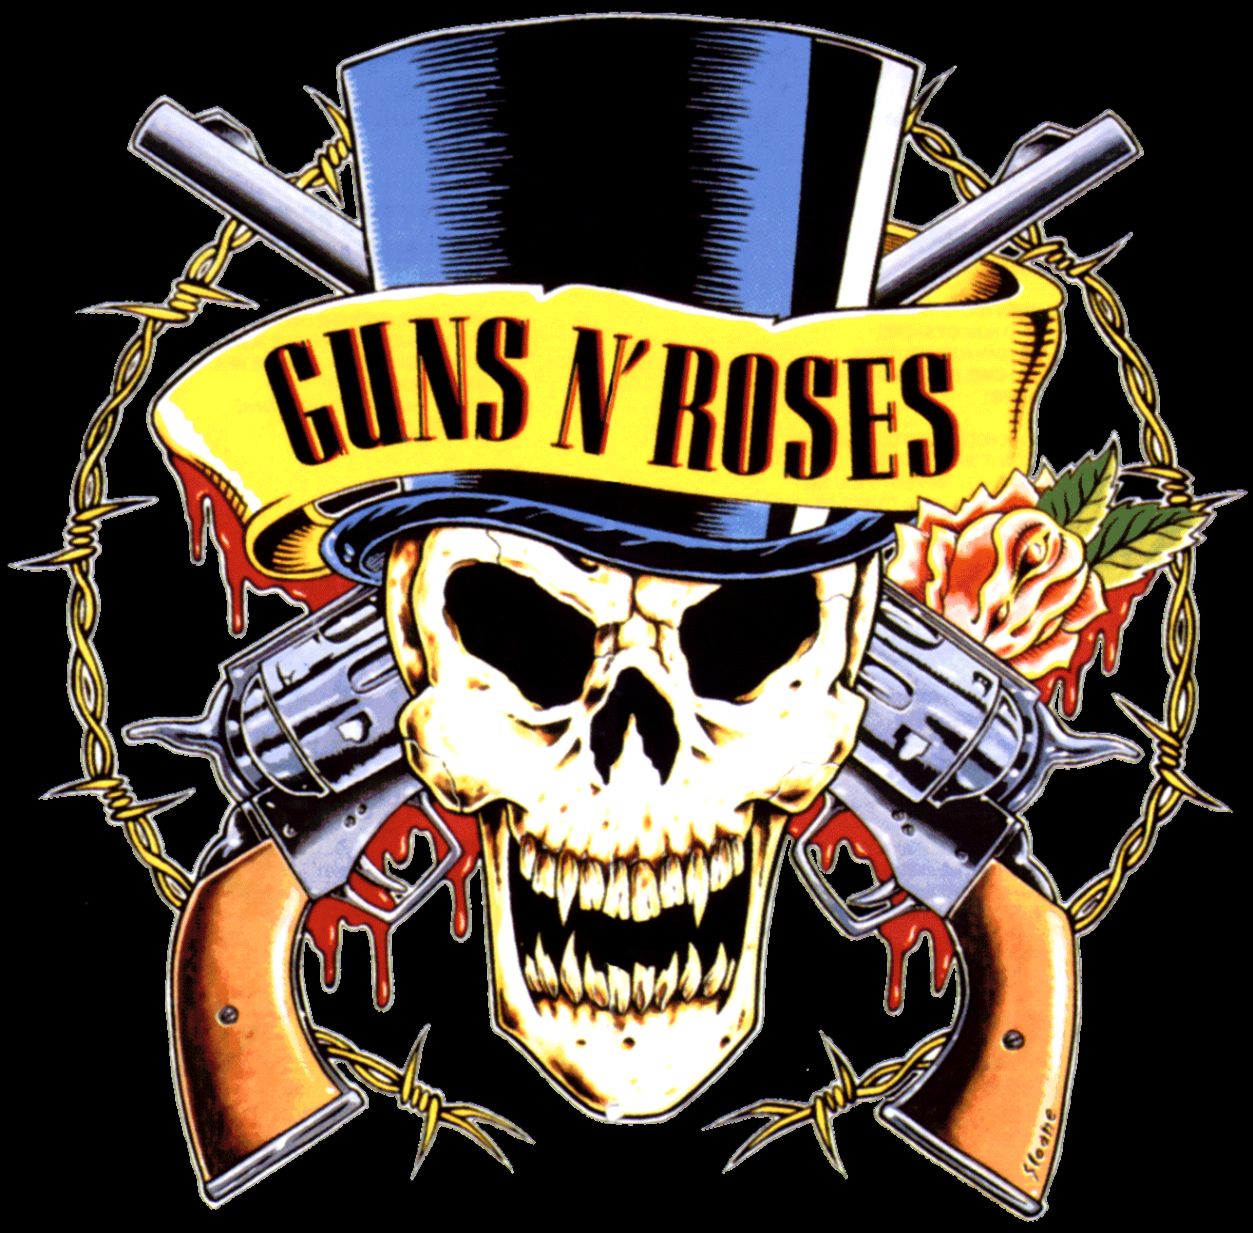 Guns N' Roses - Greatest Video Hits Playlist